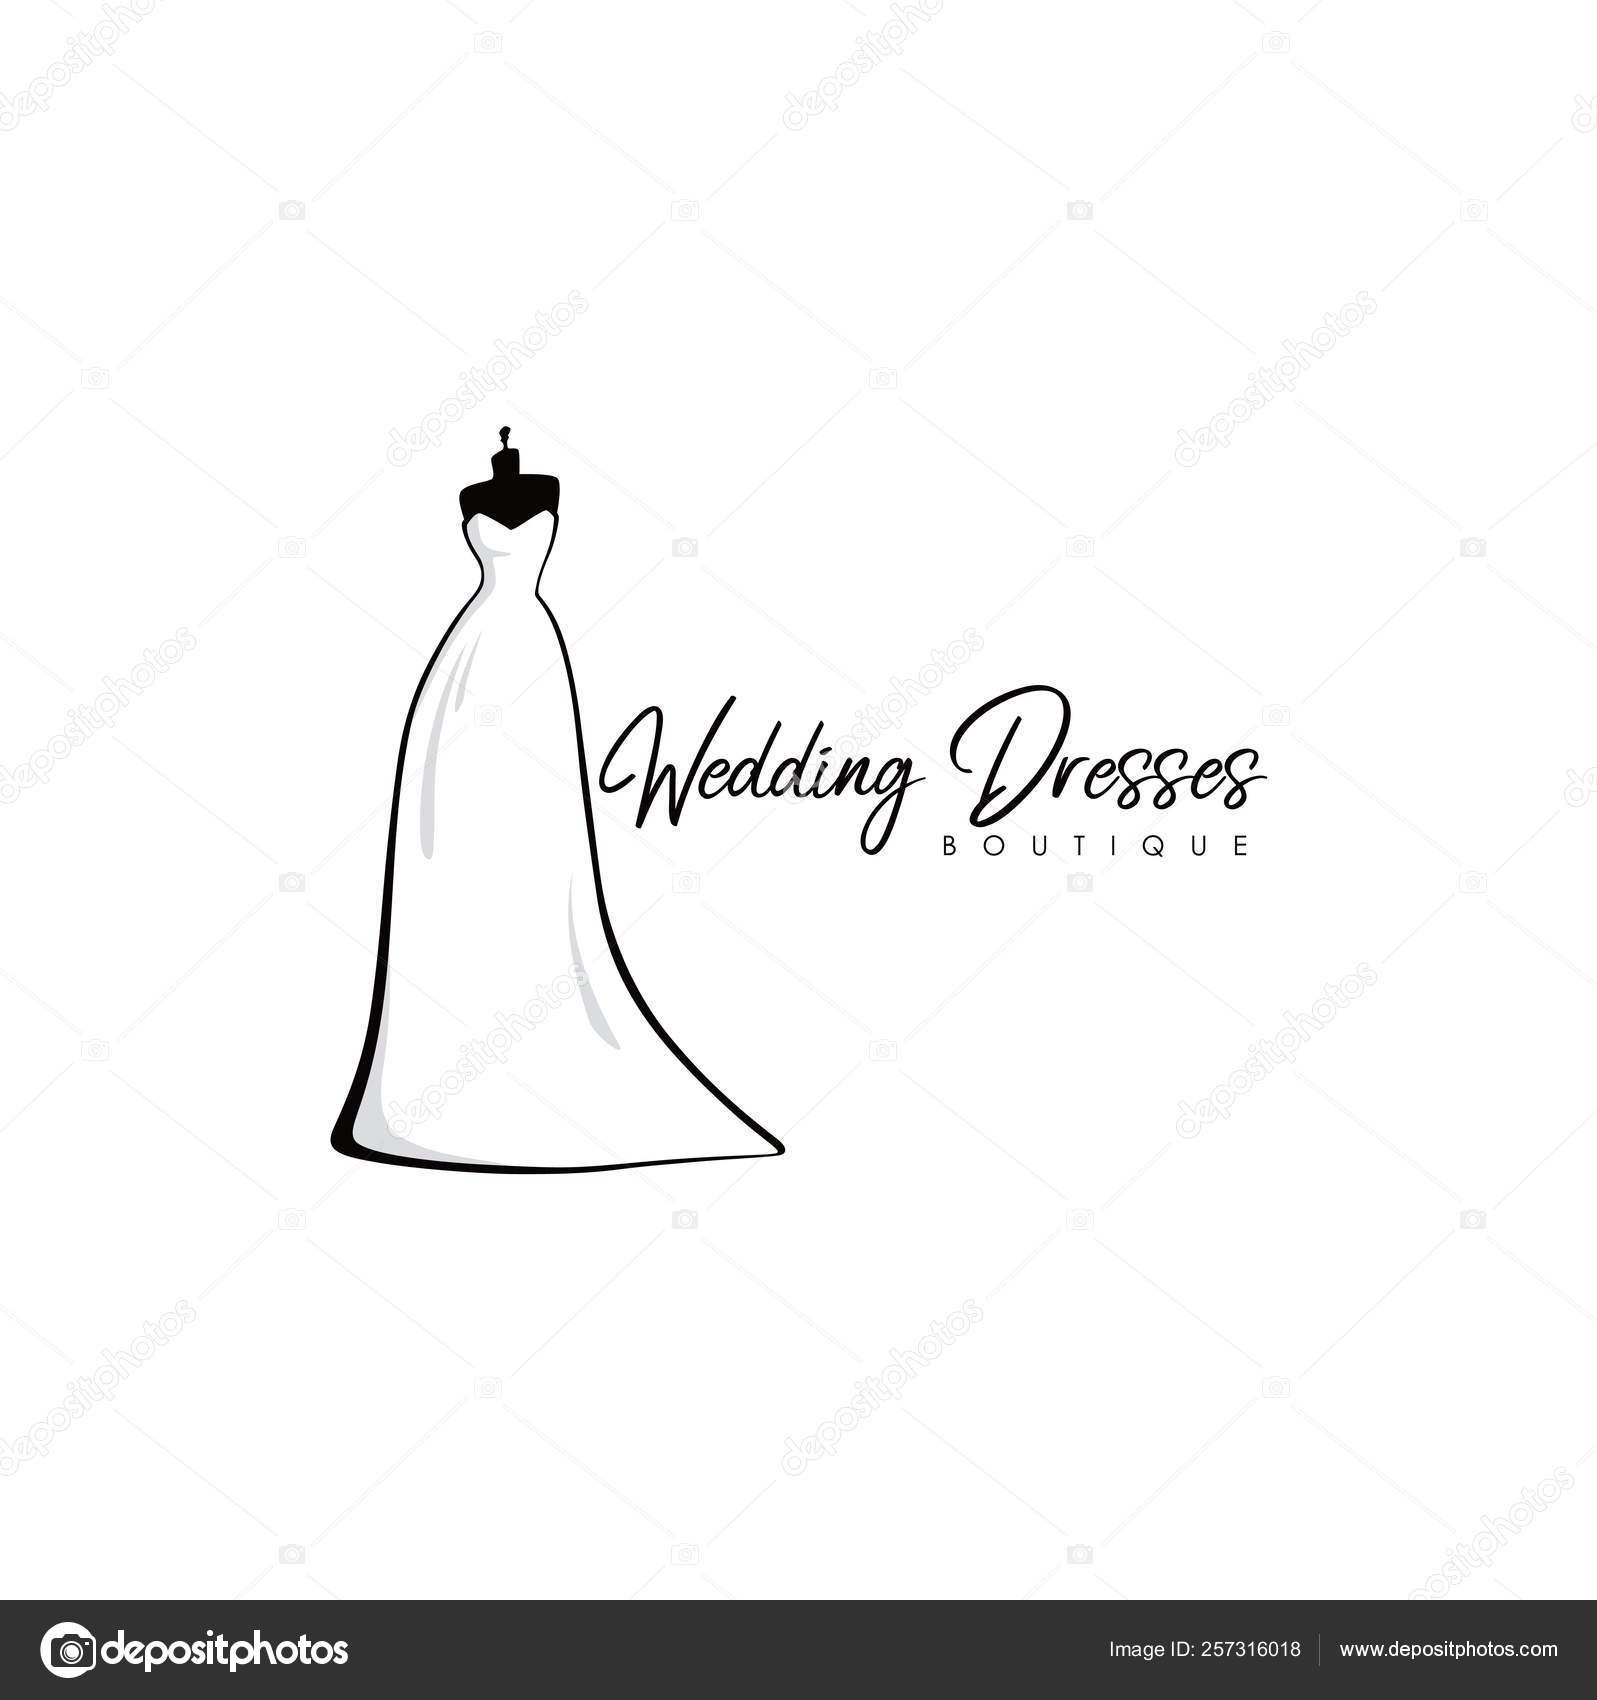 Bridal Boutique Logos Monochrome Bridal Boutique Logo Wedding